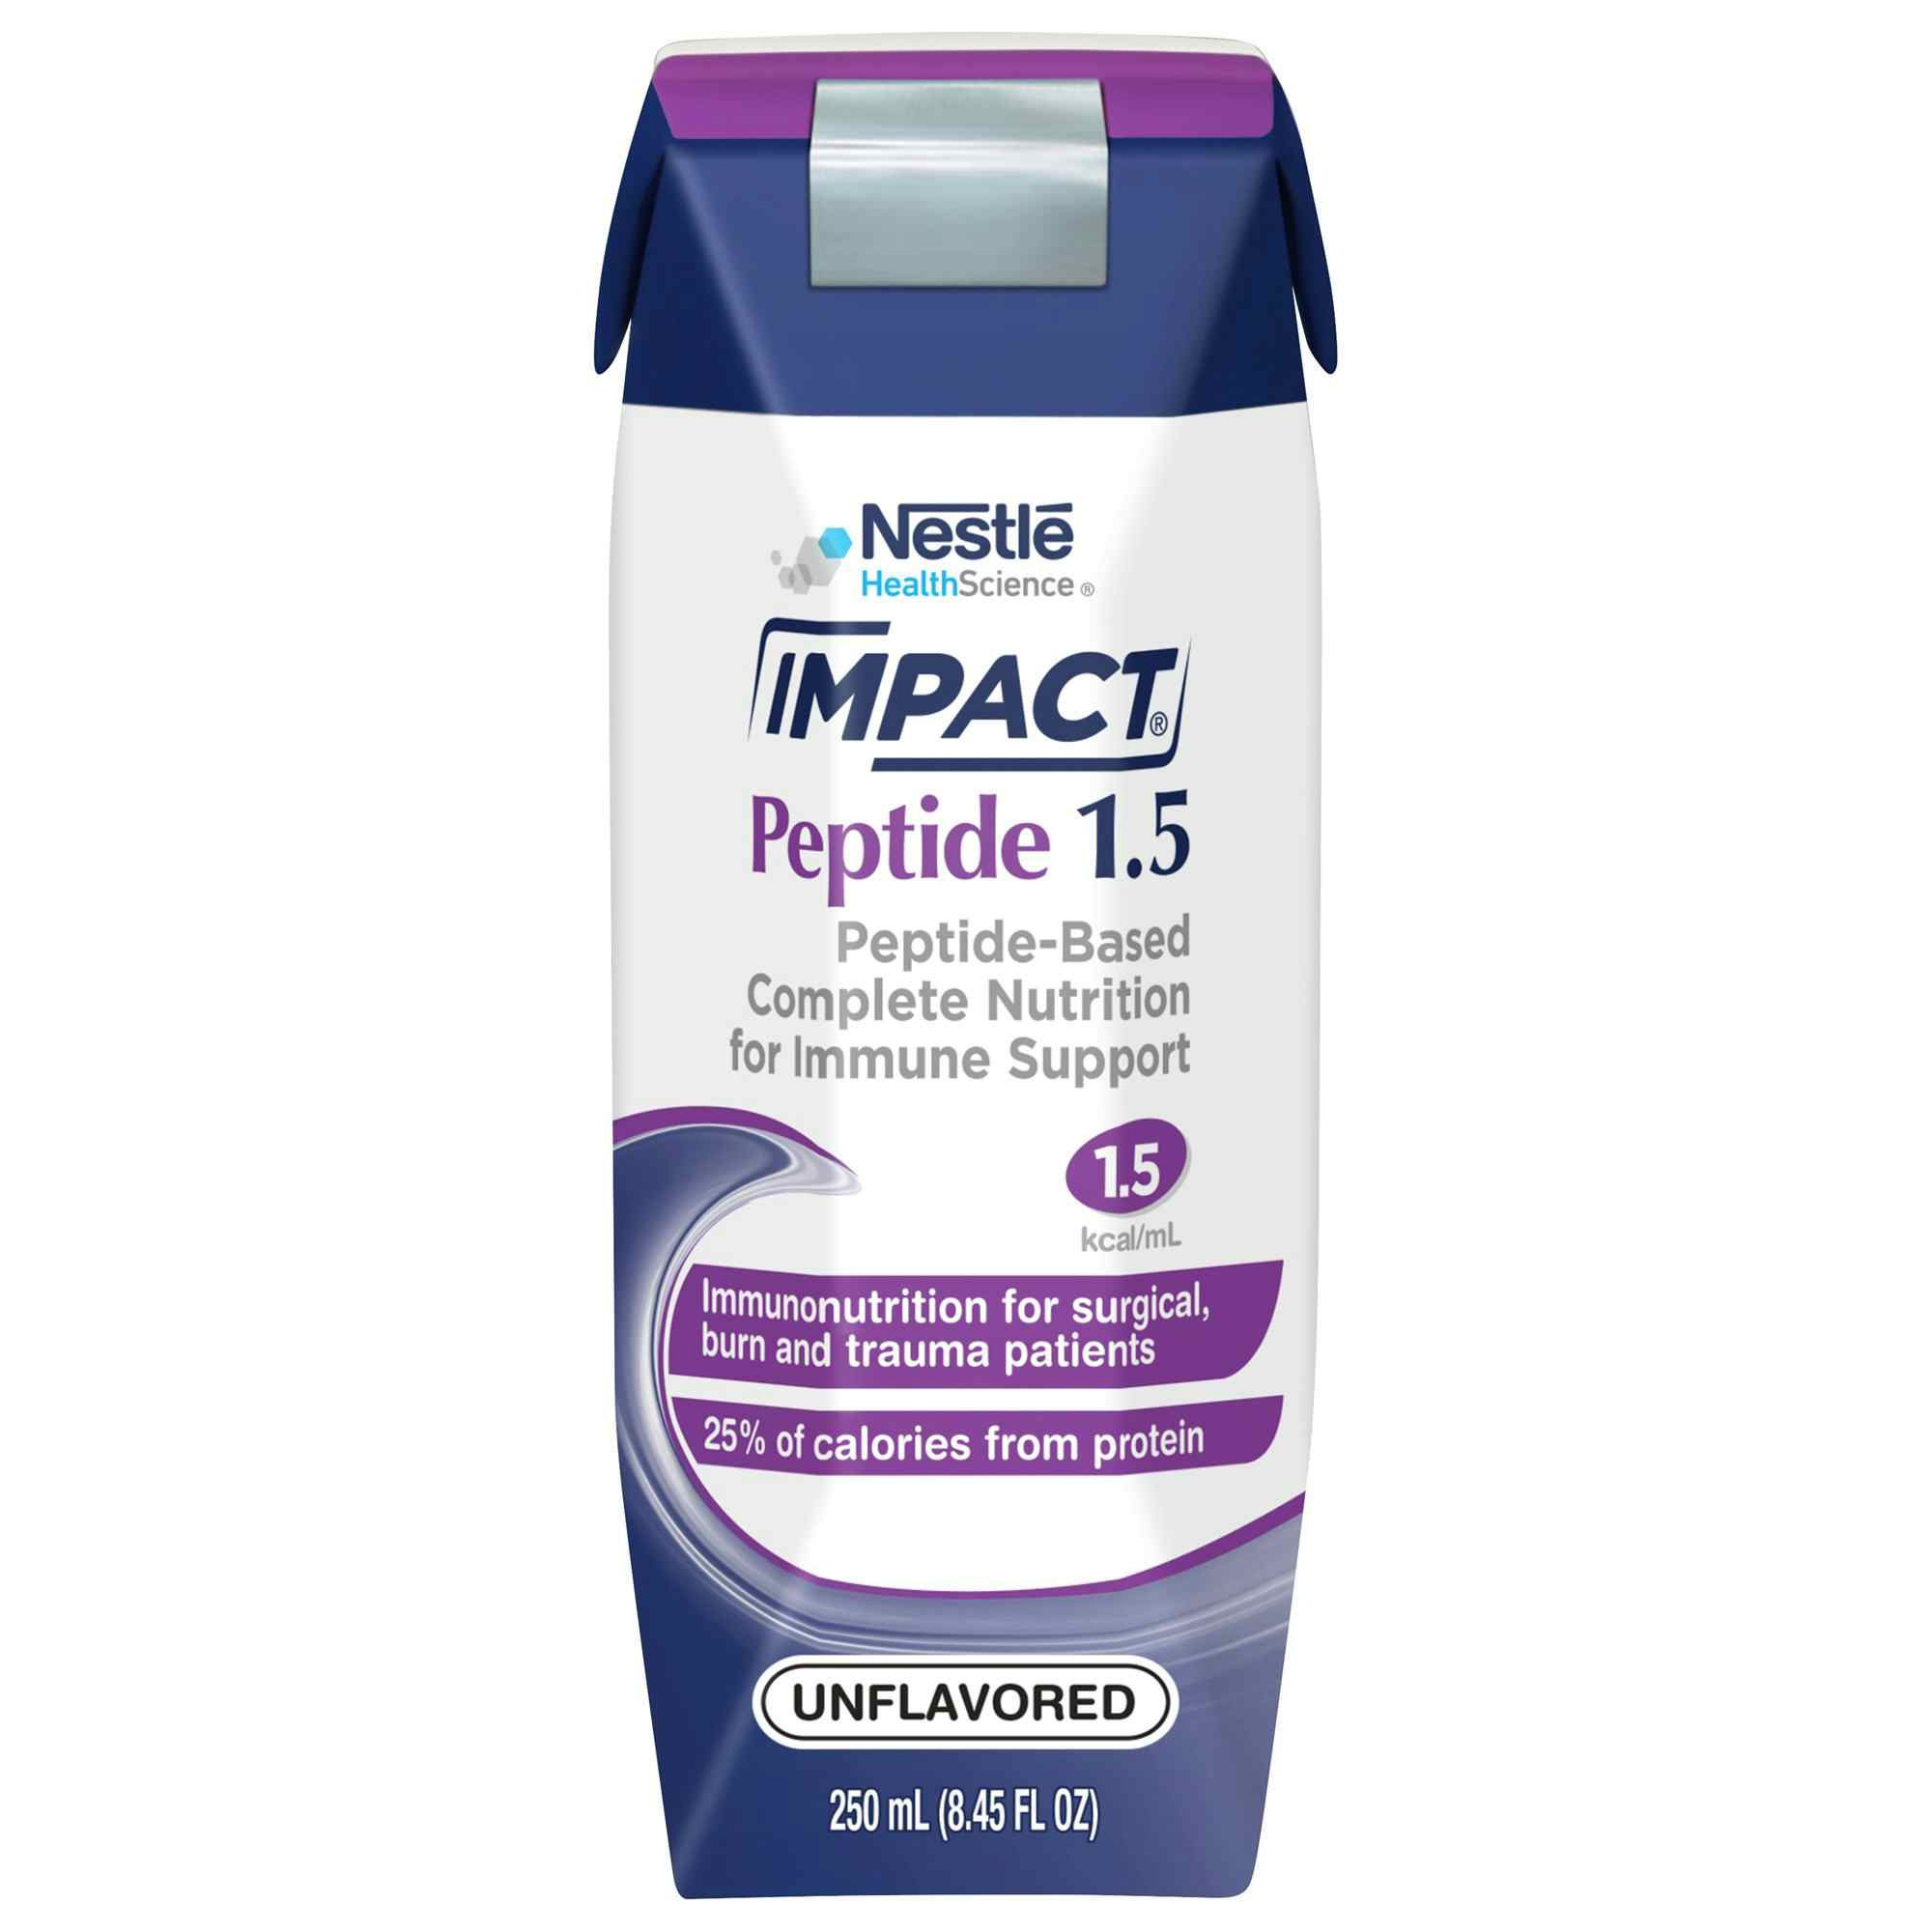 Nestle HealthScience Impact Peptide 1.5 Tube Feeding Formula, 8.4 oz.